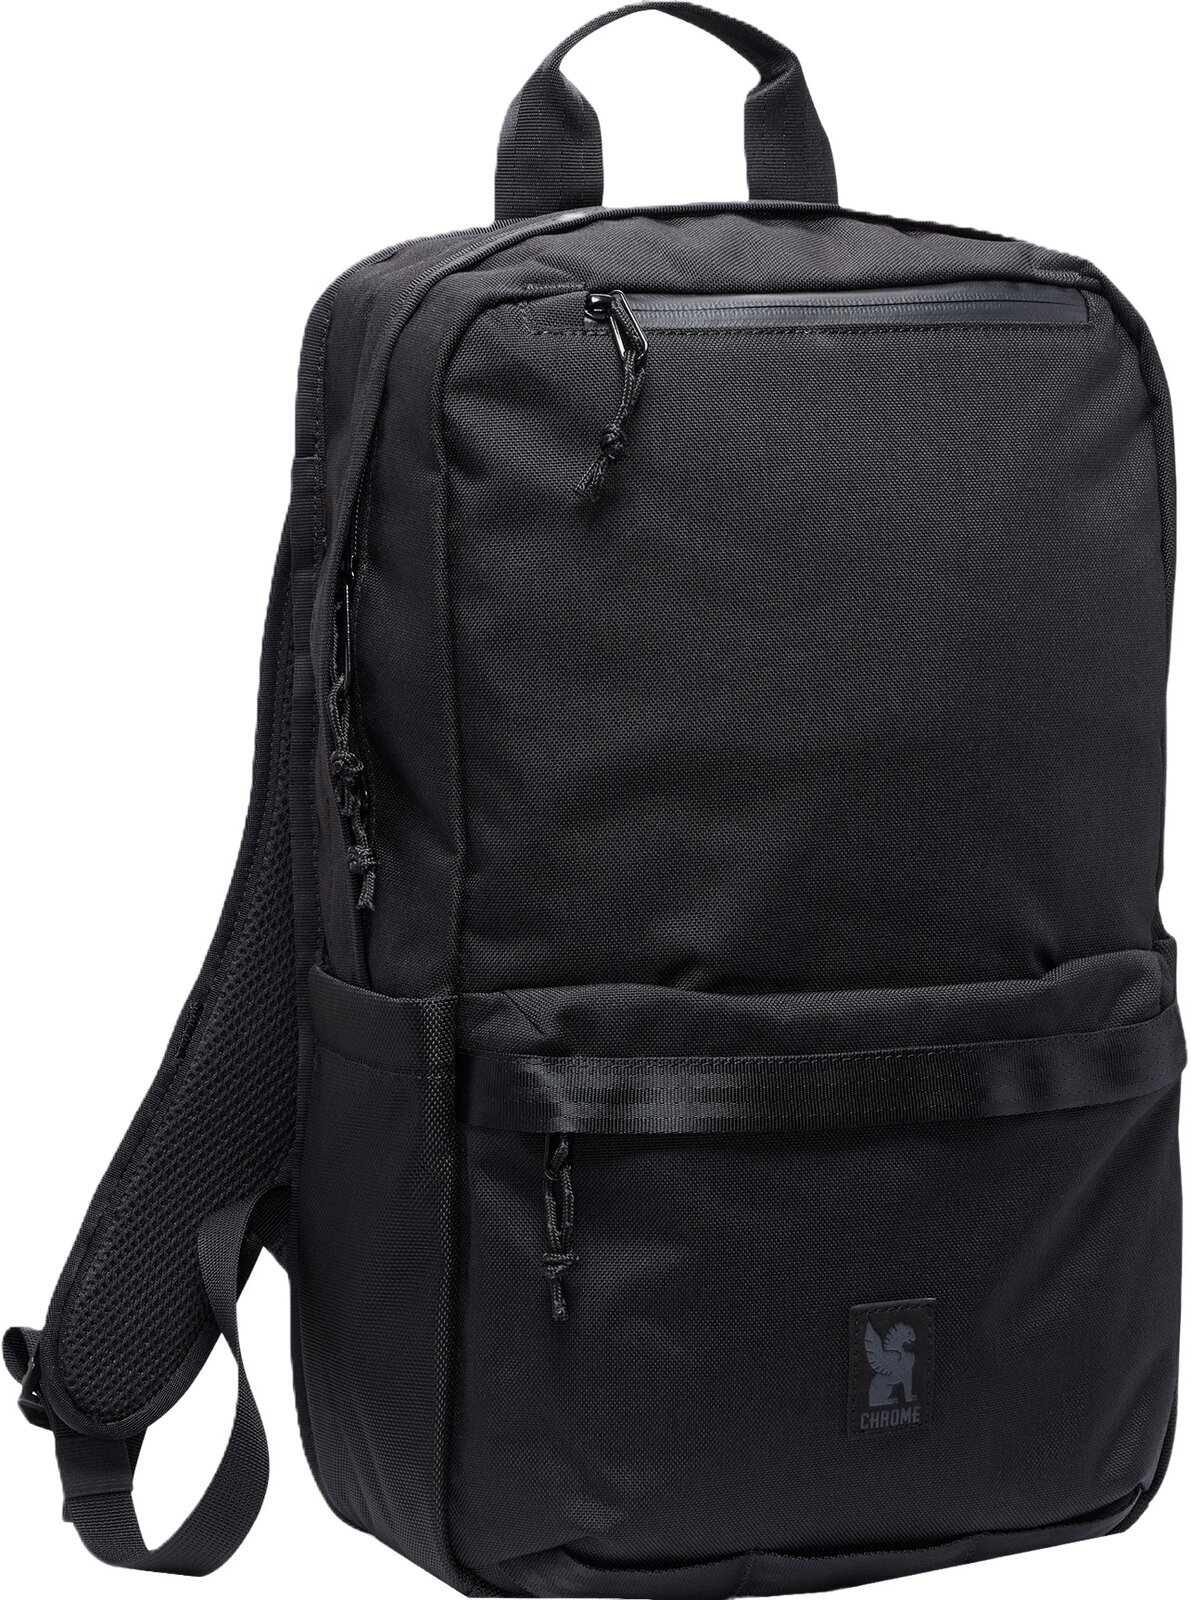 Лайфстайл раница / Чанта Chrome Hondo Backpack Black 18 L Раница